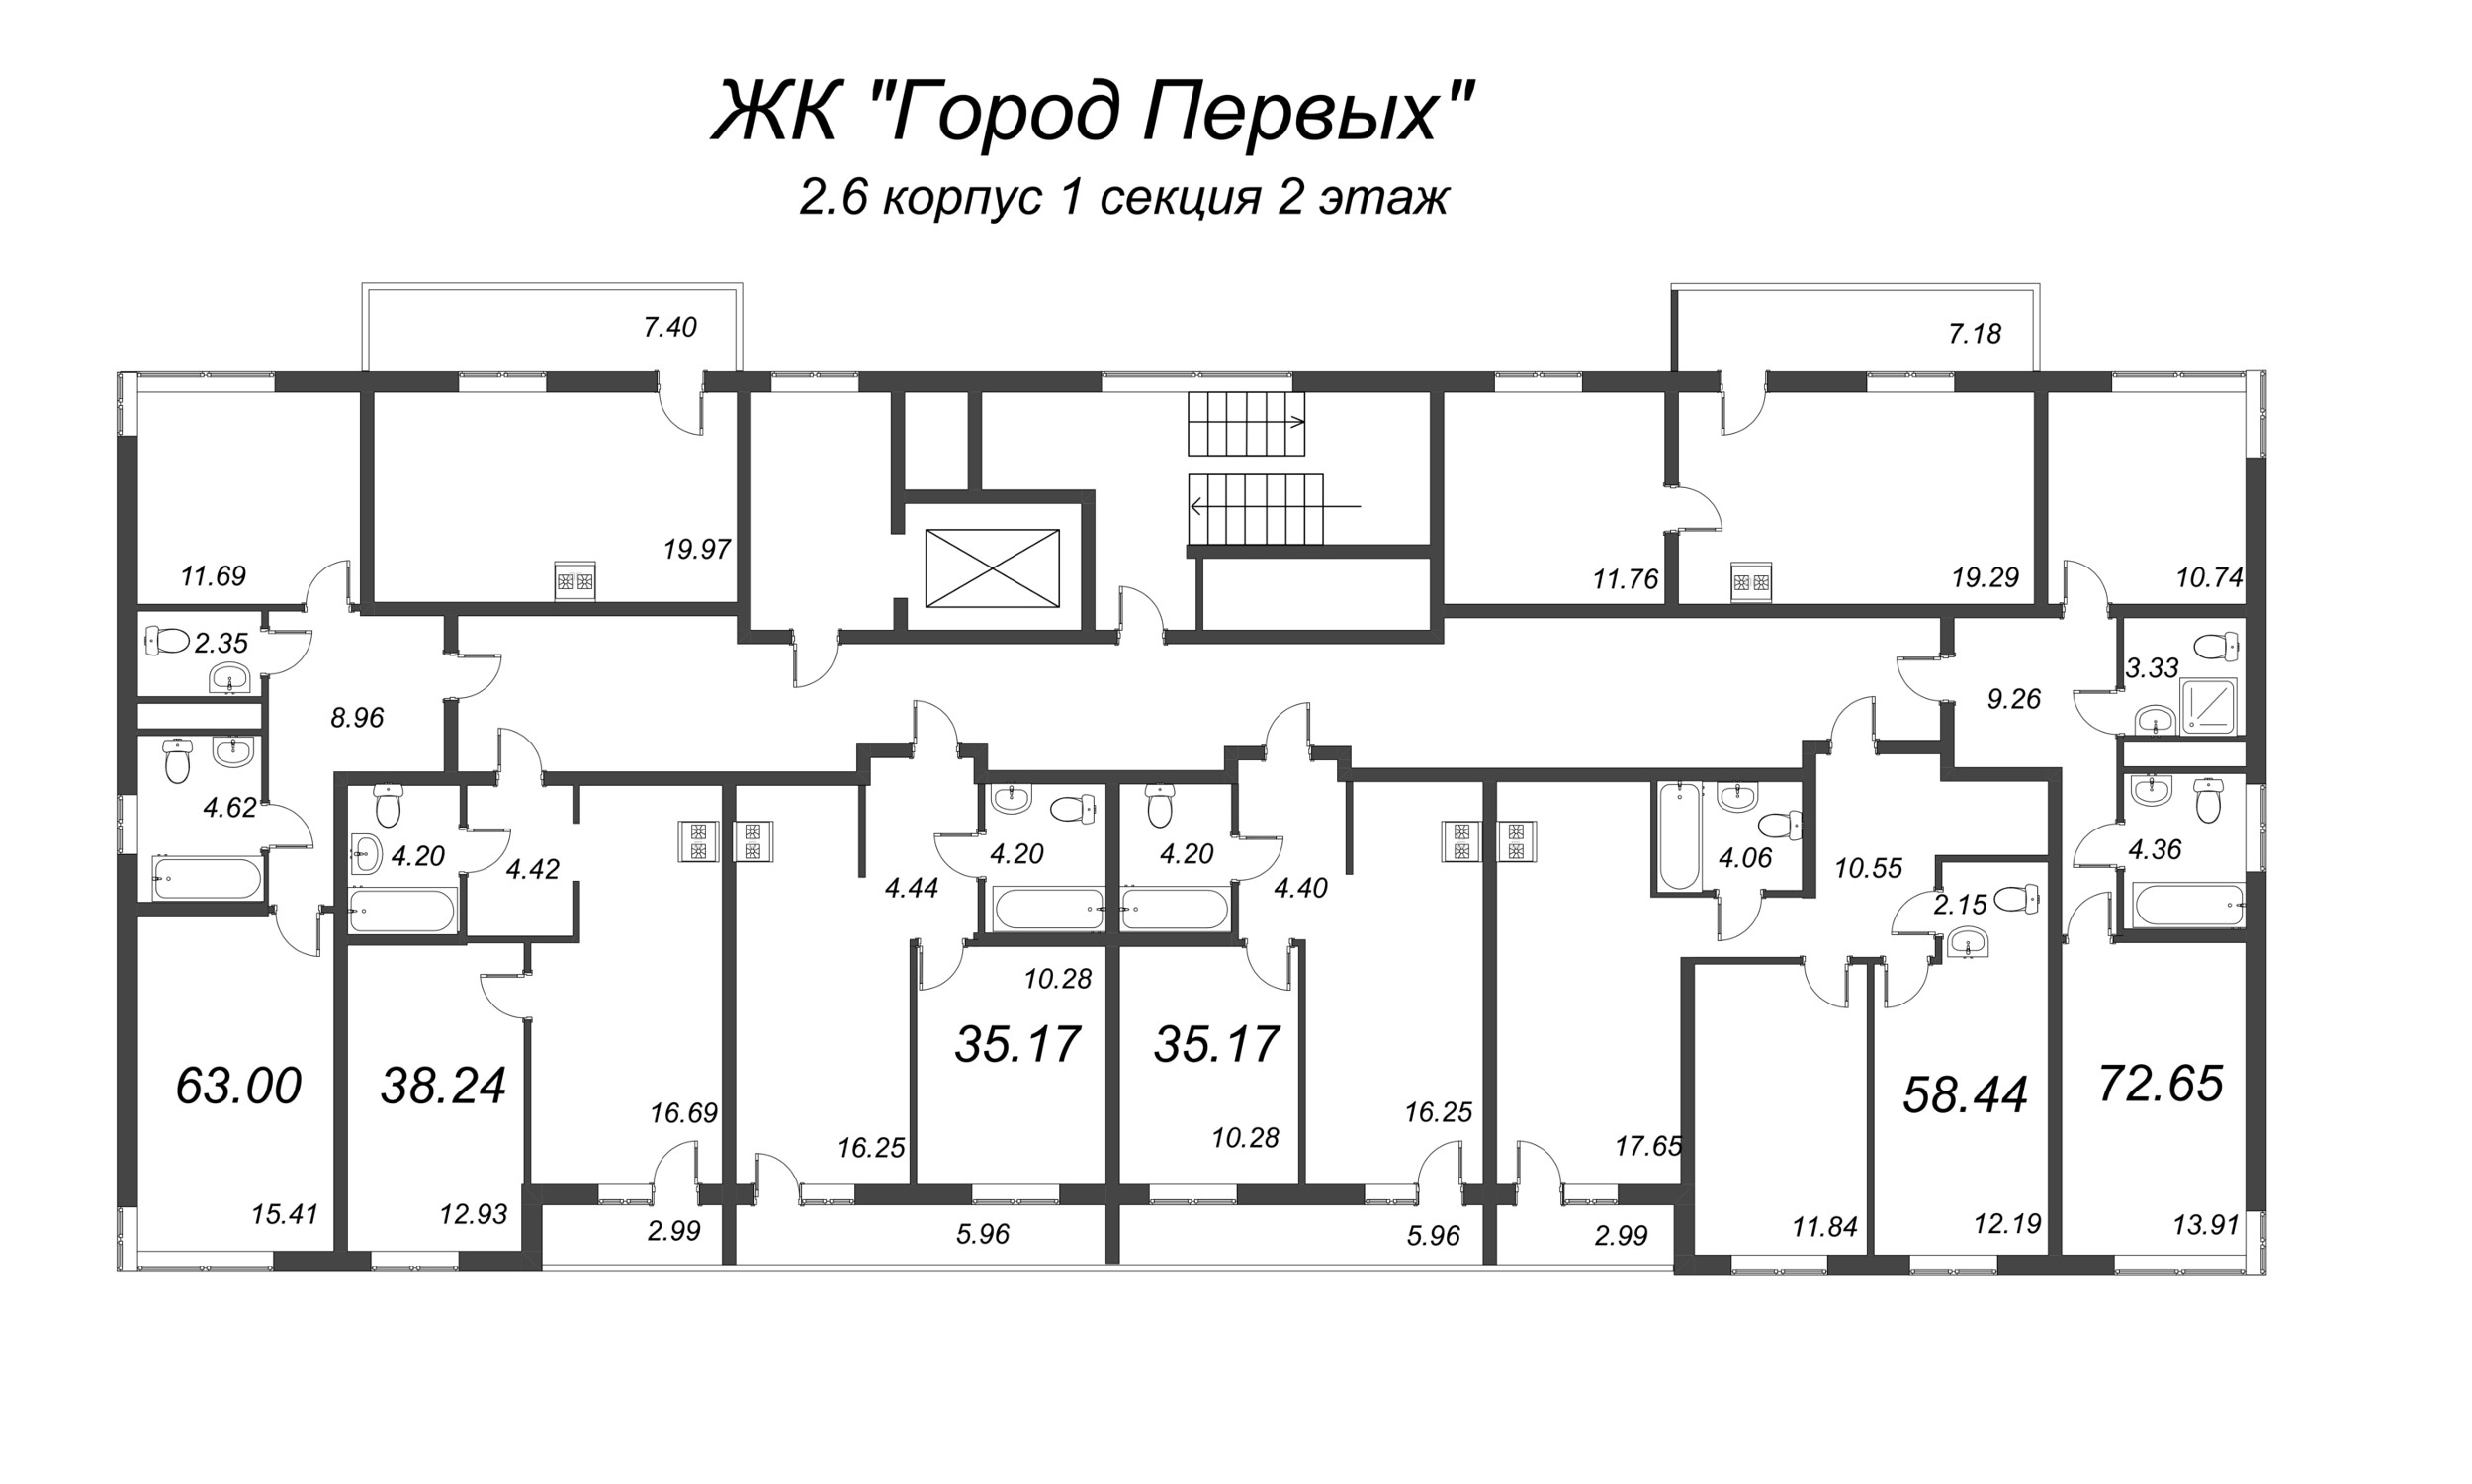 3-комнатная (Евро) квартира, 54.51 м² - планировка этажа